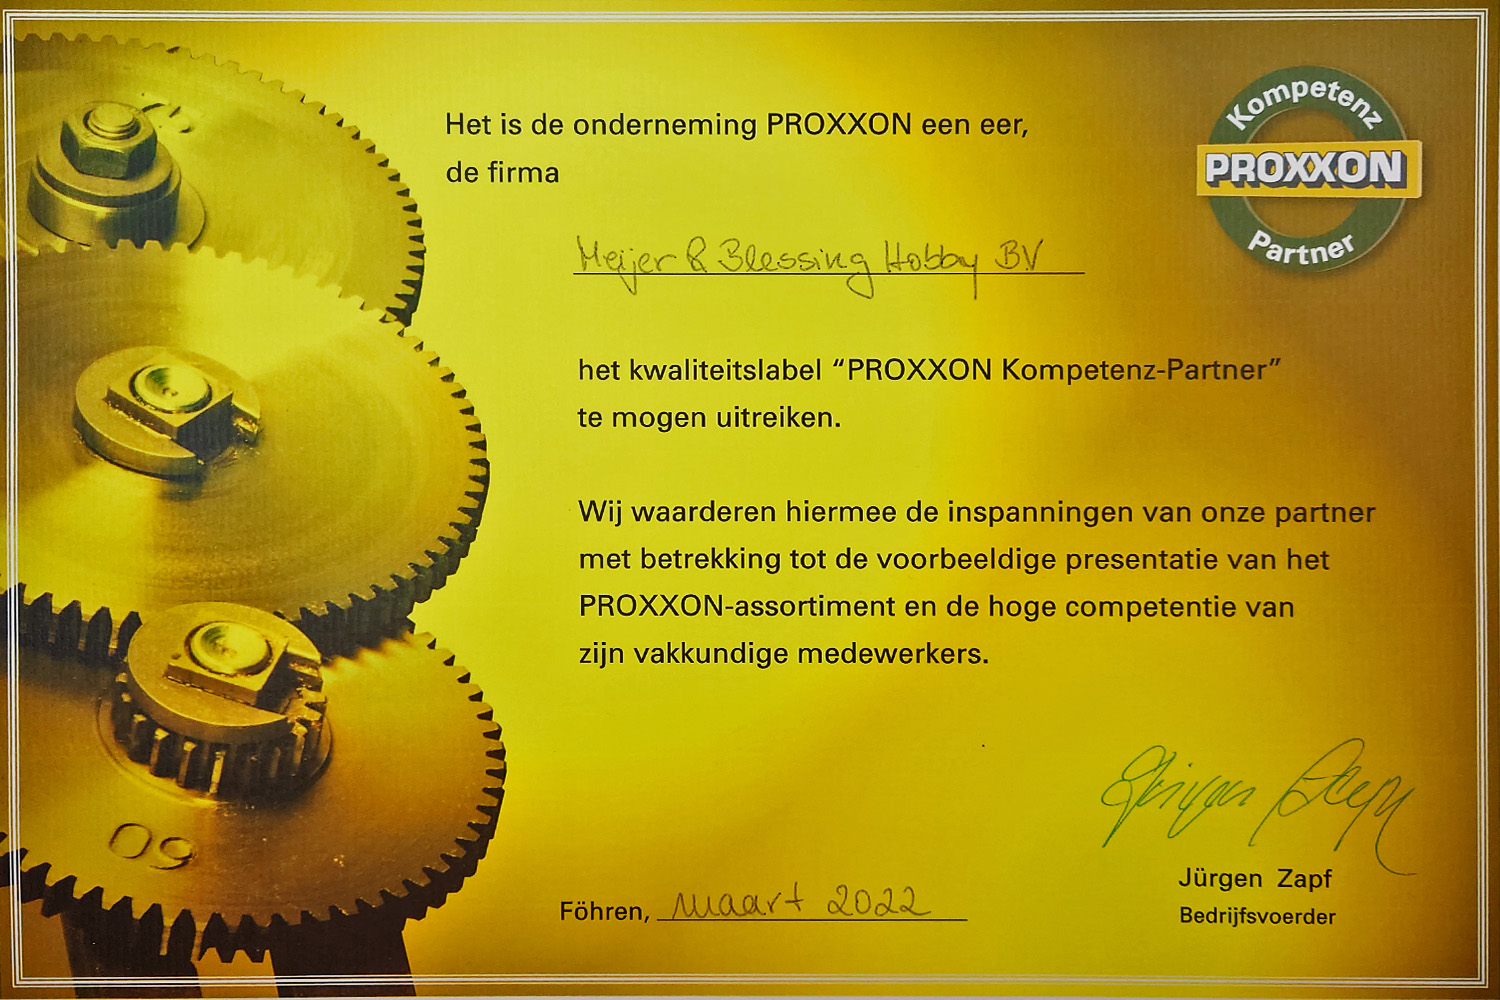 Meijer & Blessing, gecertificeerd PROXXON 'Kompetenz-Partner' 